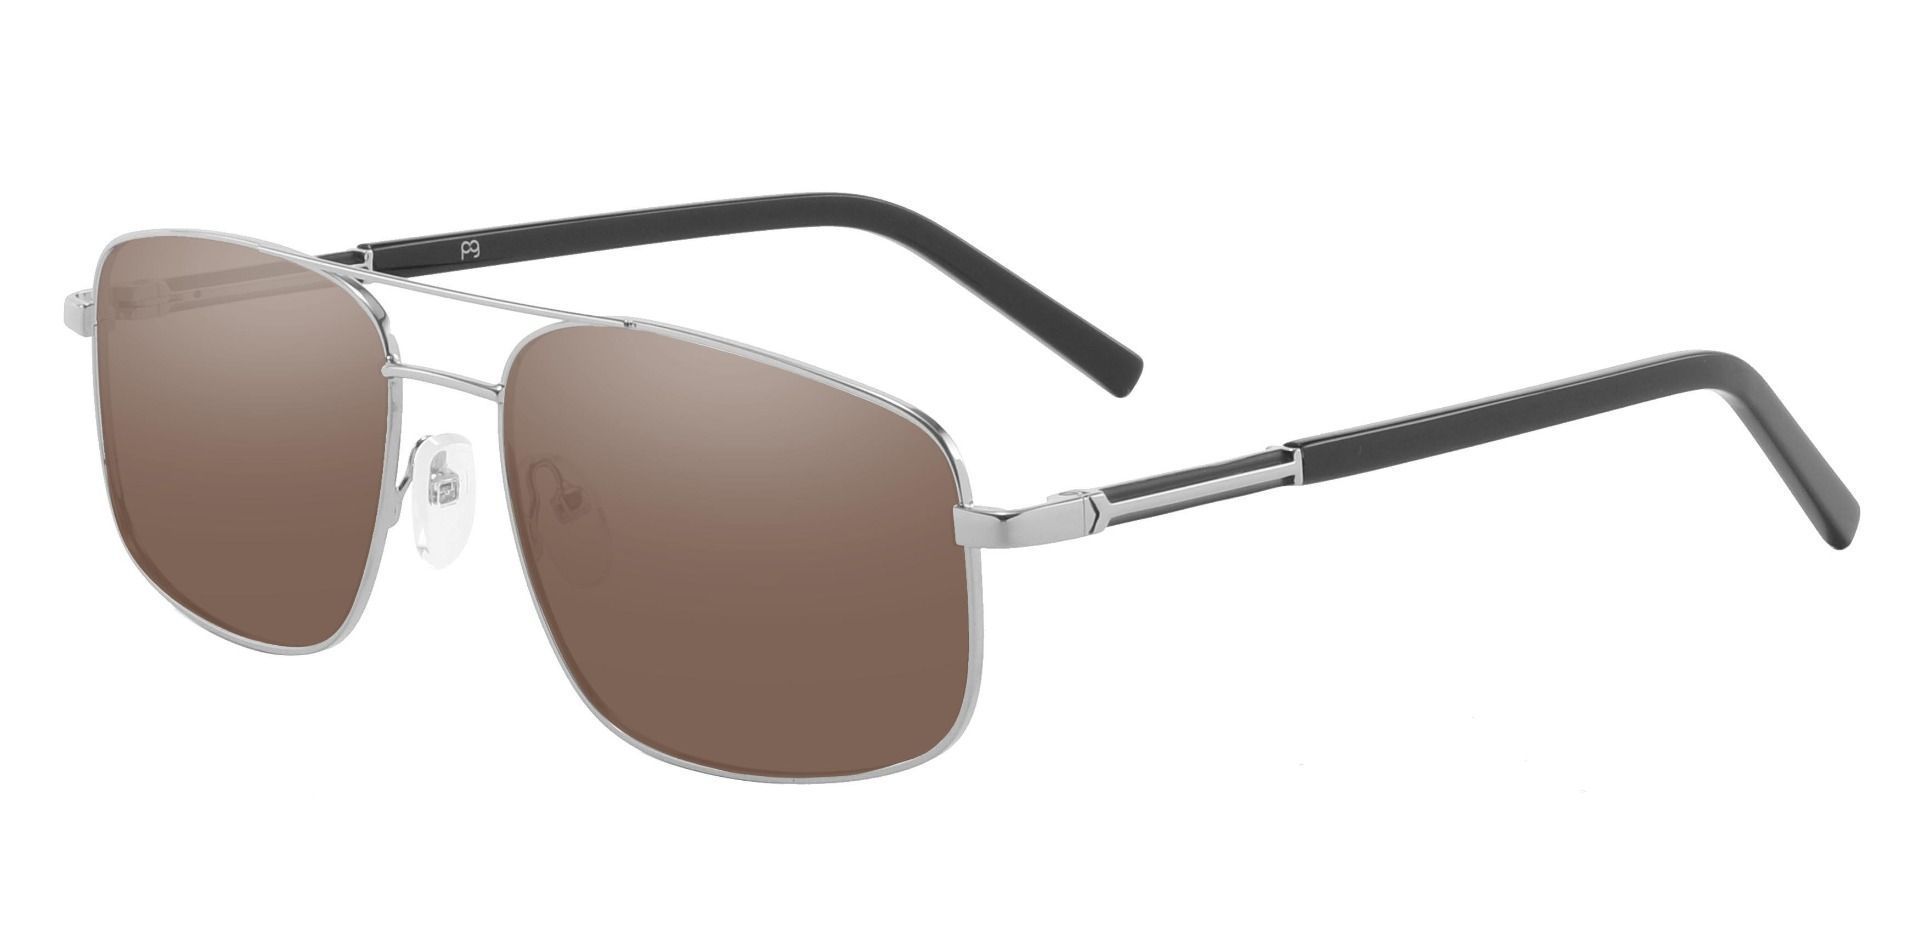 Davenport Aviator Prescription Sunglasses - Silver Frame With Brown Lenses